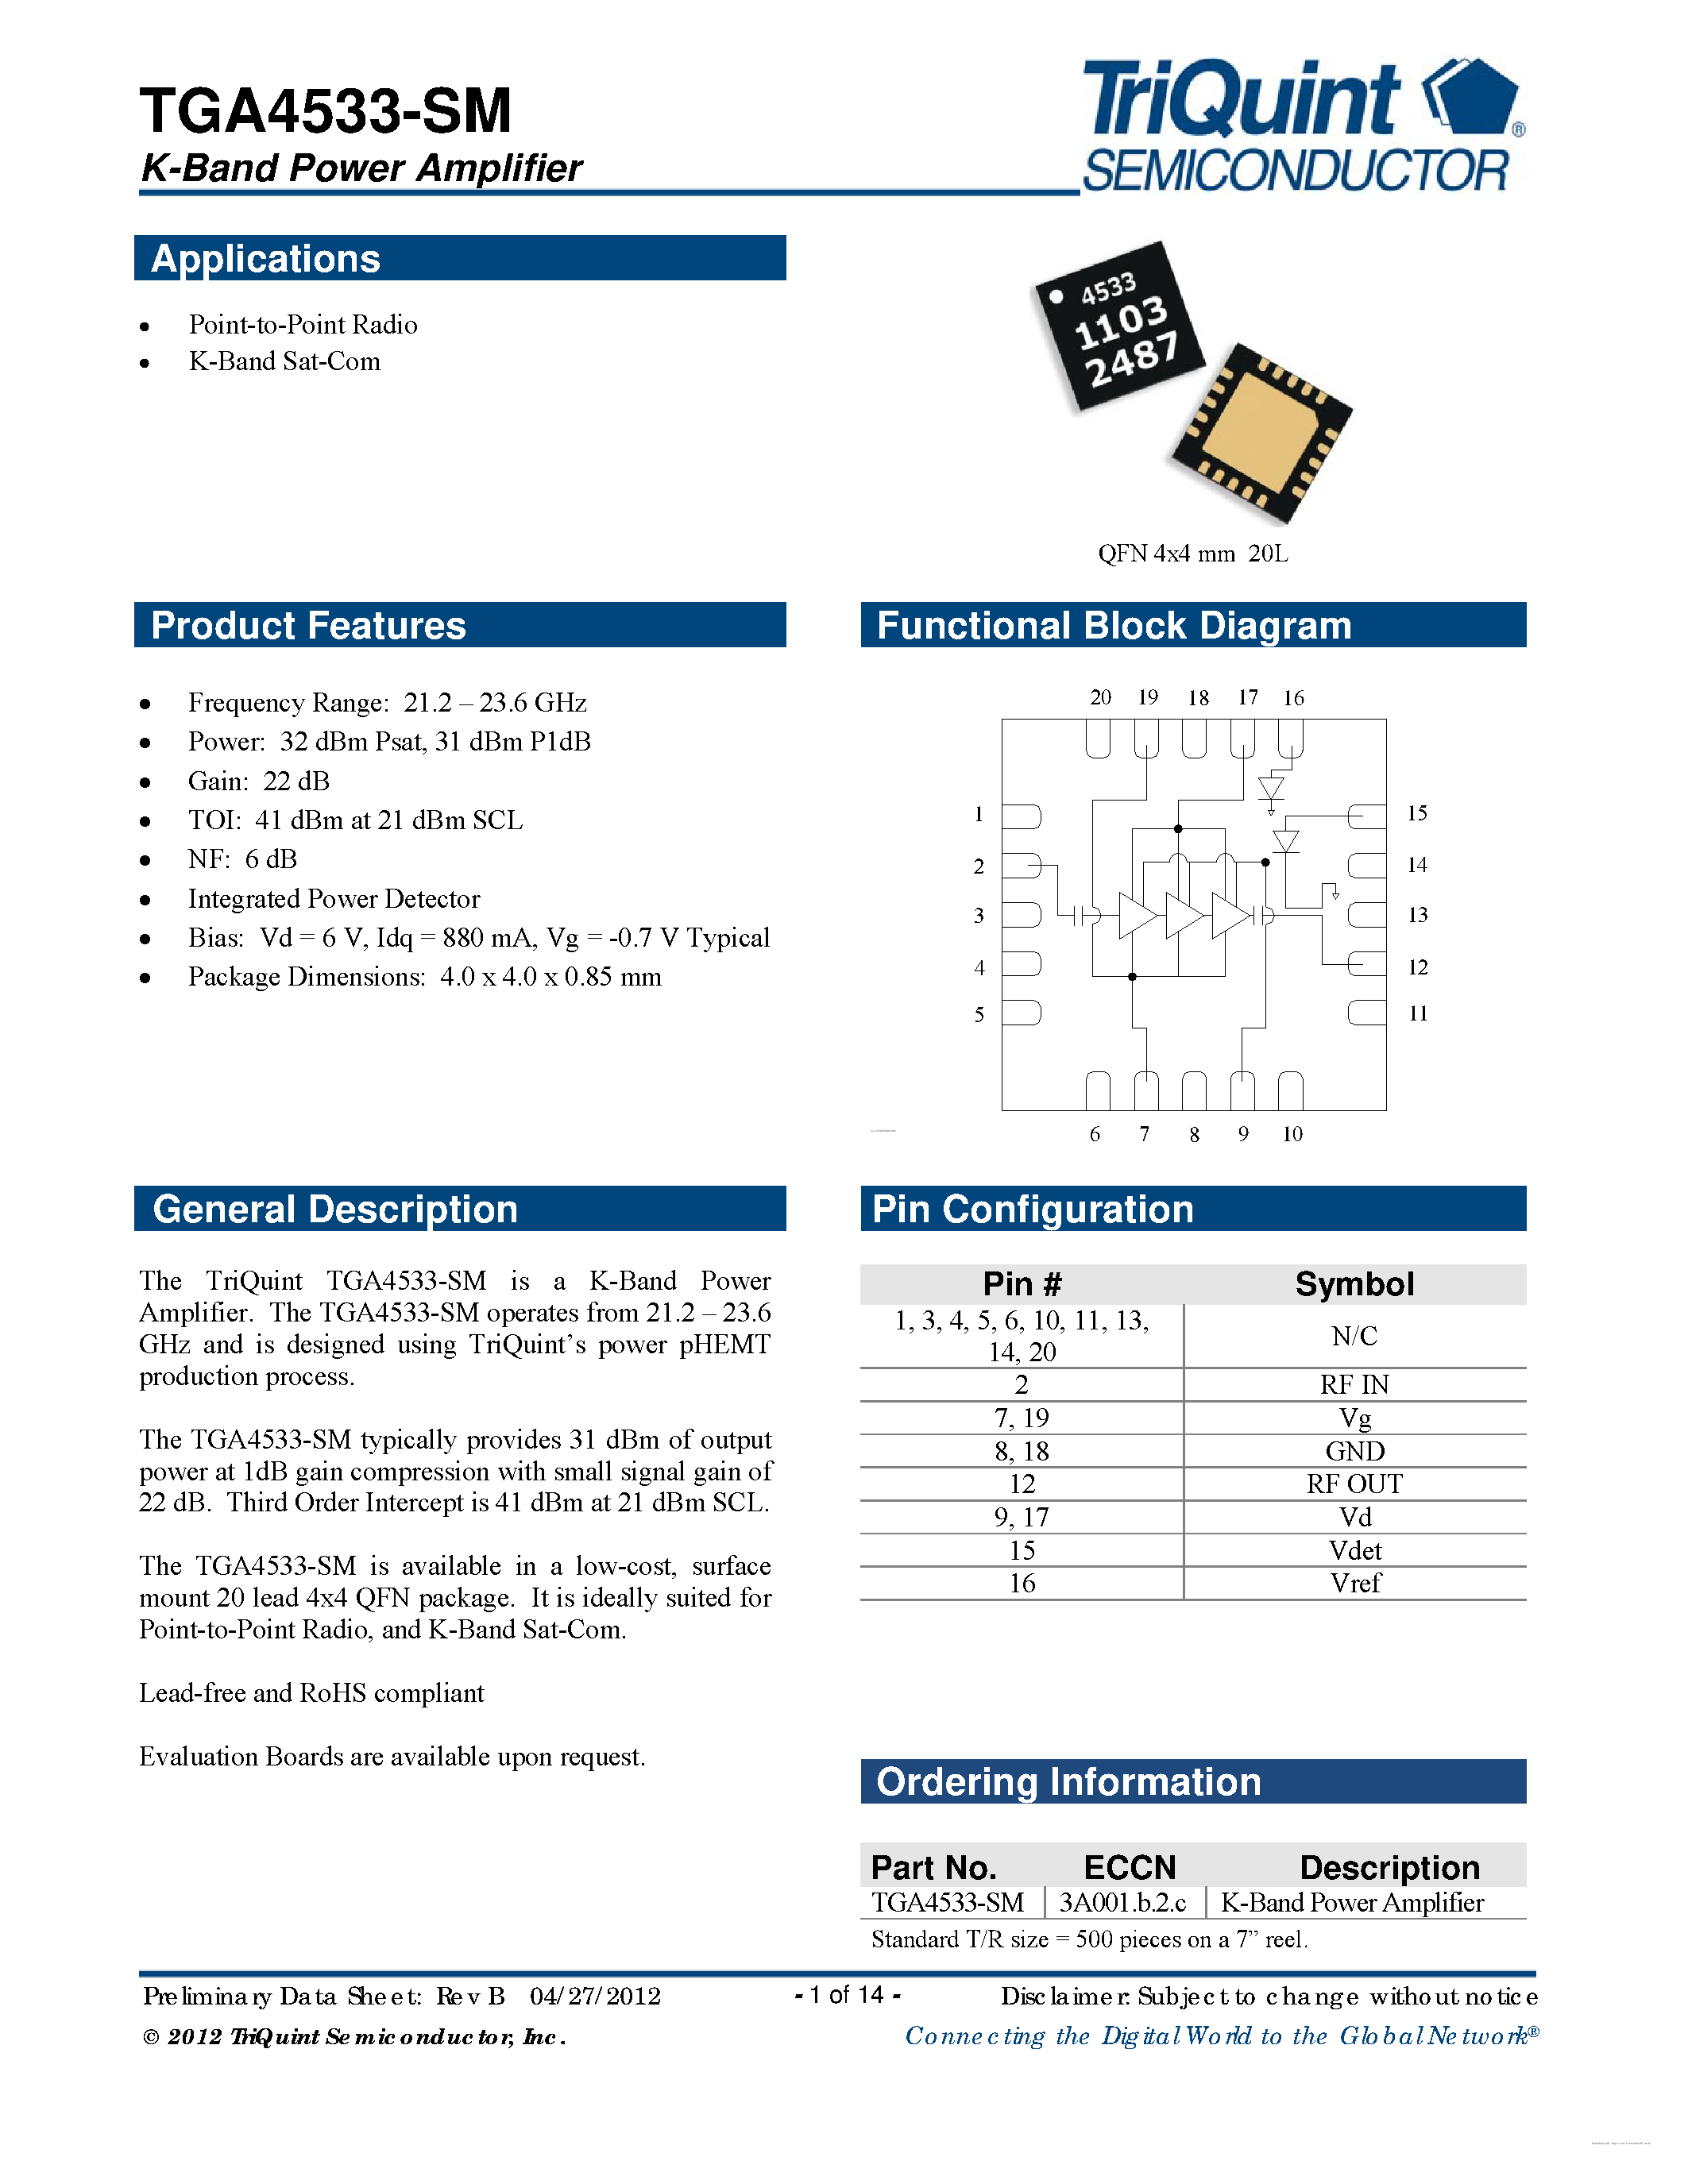 Даташит TGA4533-SM - K-Band Power Amplifier страница 1